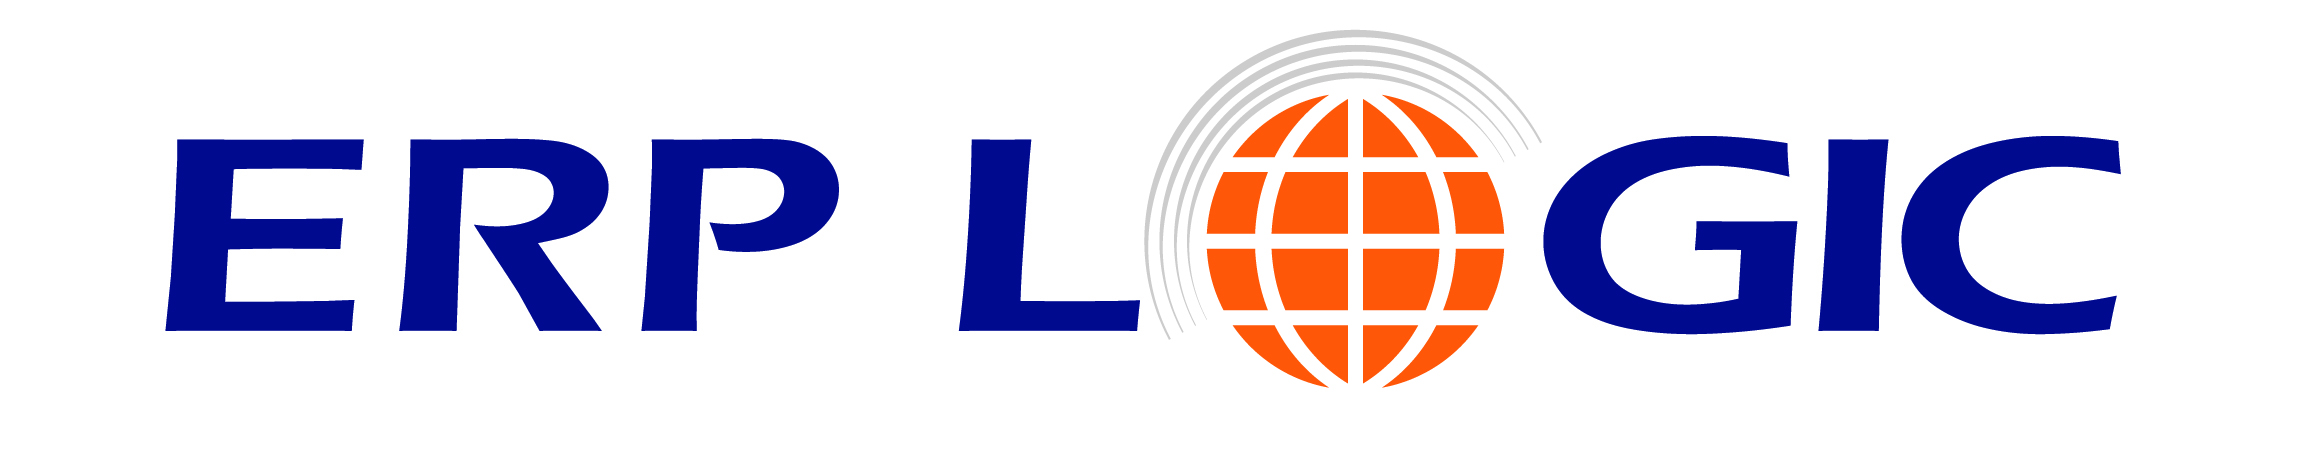 ERP Logic logo